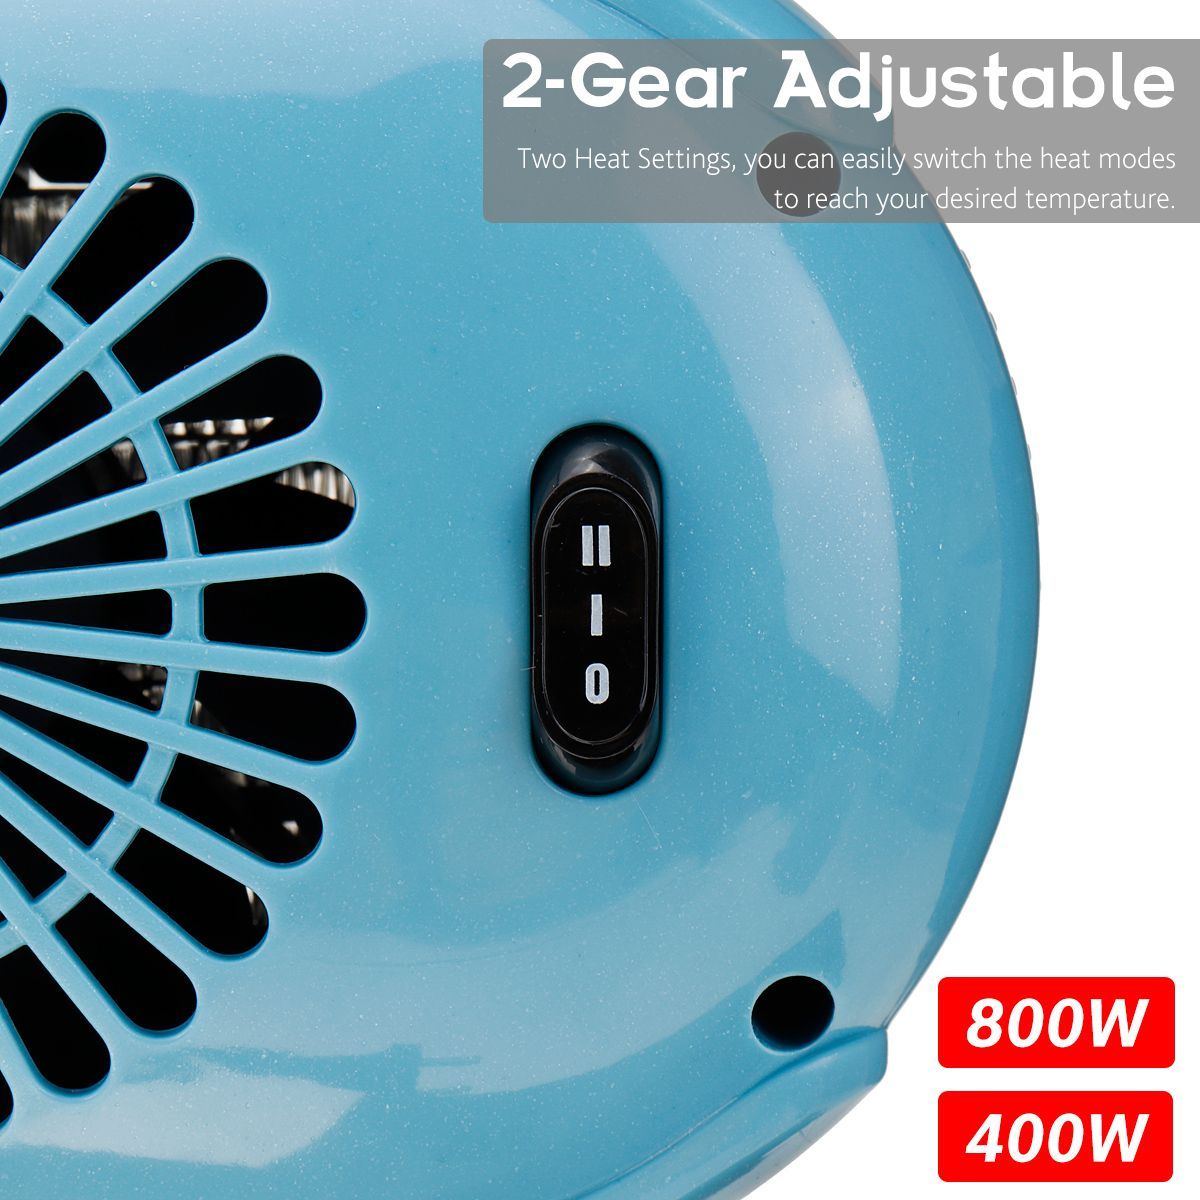 Mini-Home-Heating-2-Gear-Adjustable-Electric-Space-Heater-USEU-Plug-Portable-1762297